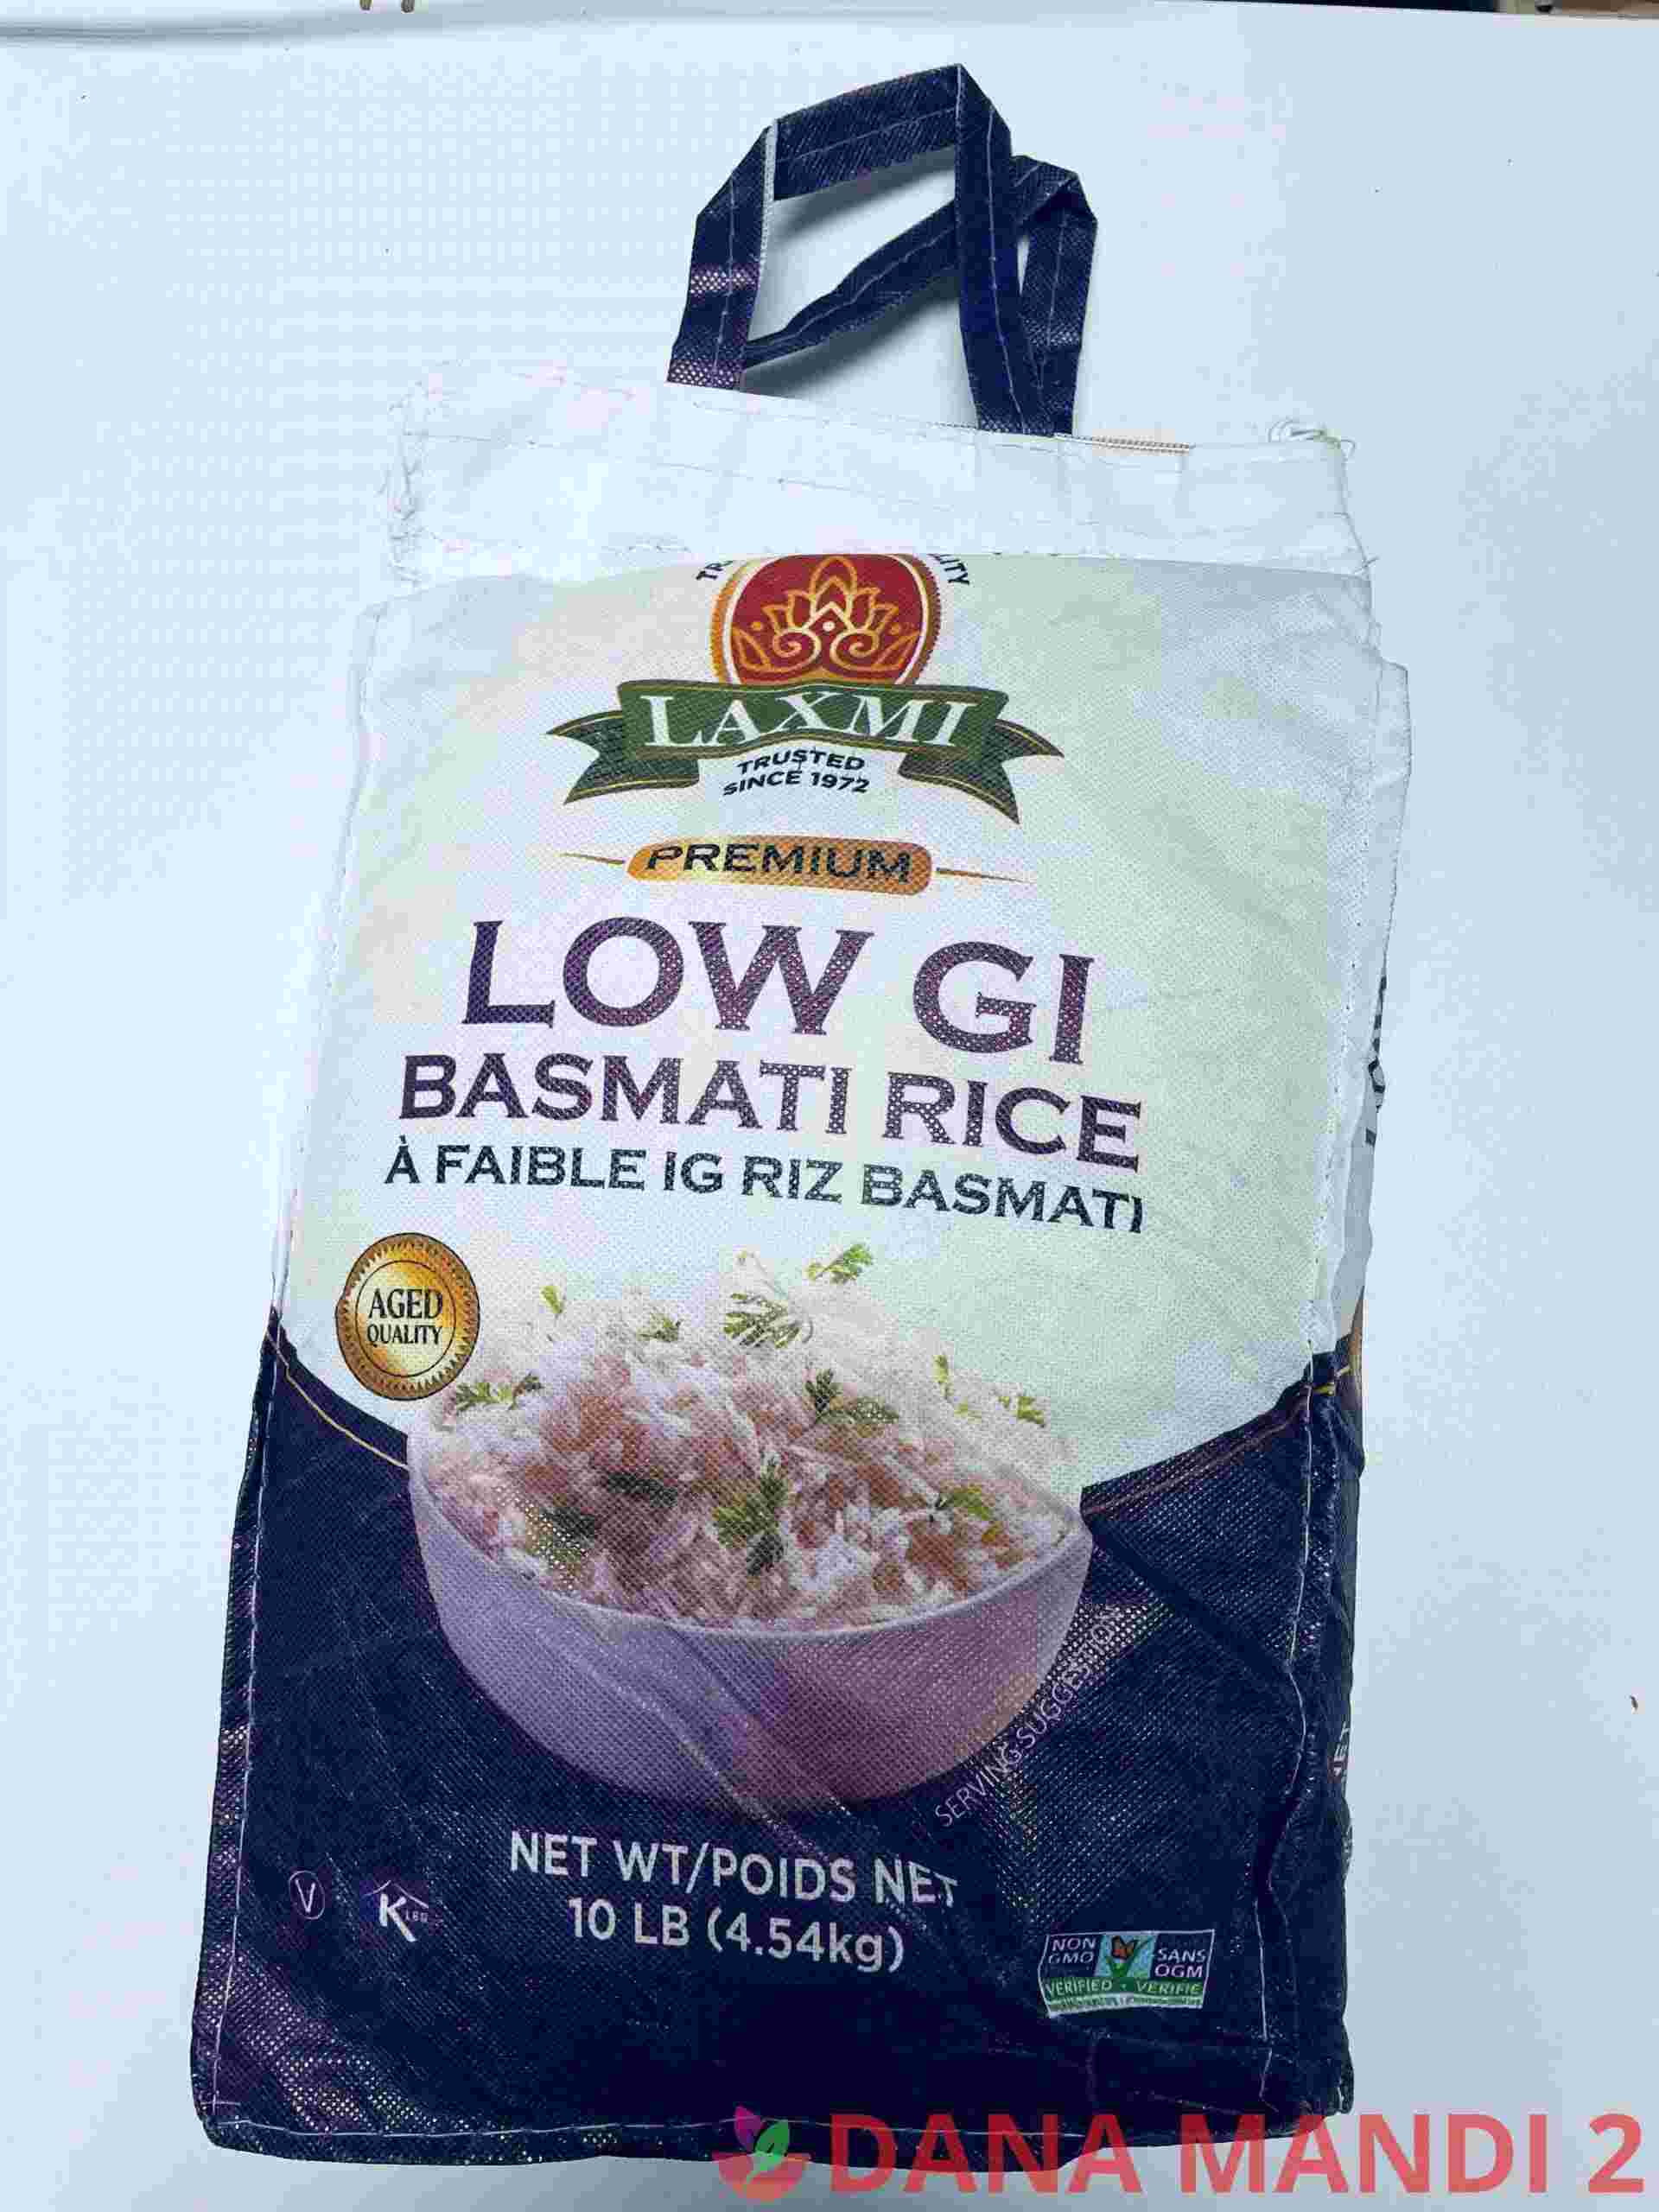 Laxmi Low Gi Basmati Rice